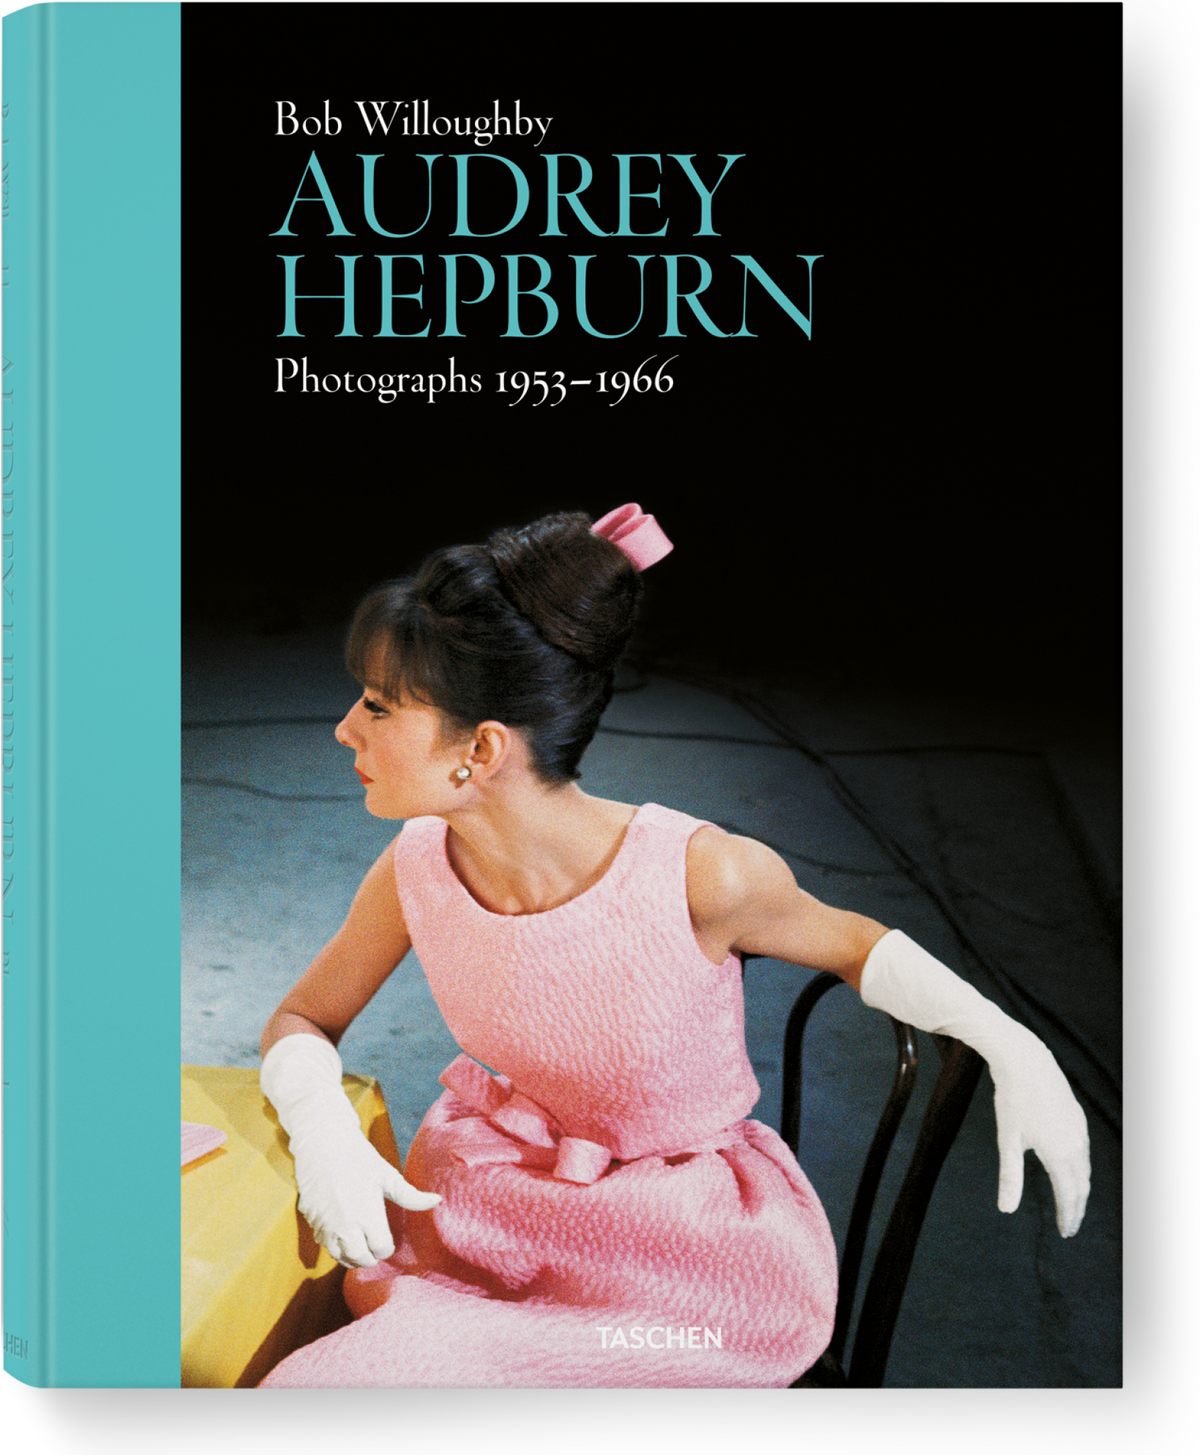 Bob Willoughby. Audrey Hepburn, Photographs 1953-1966